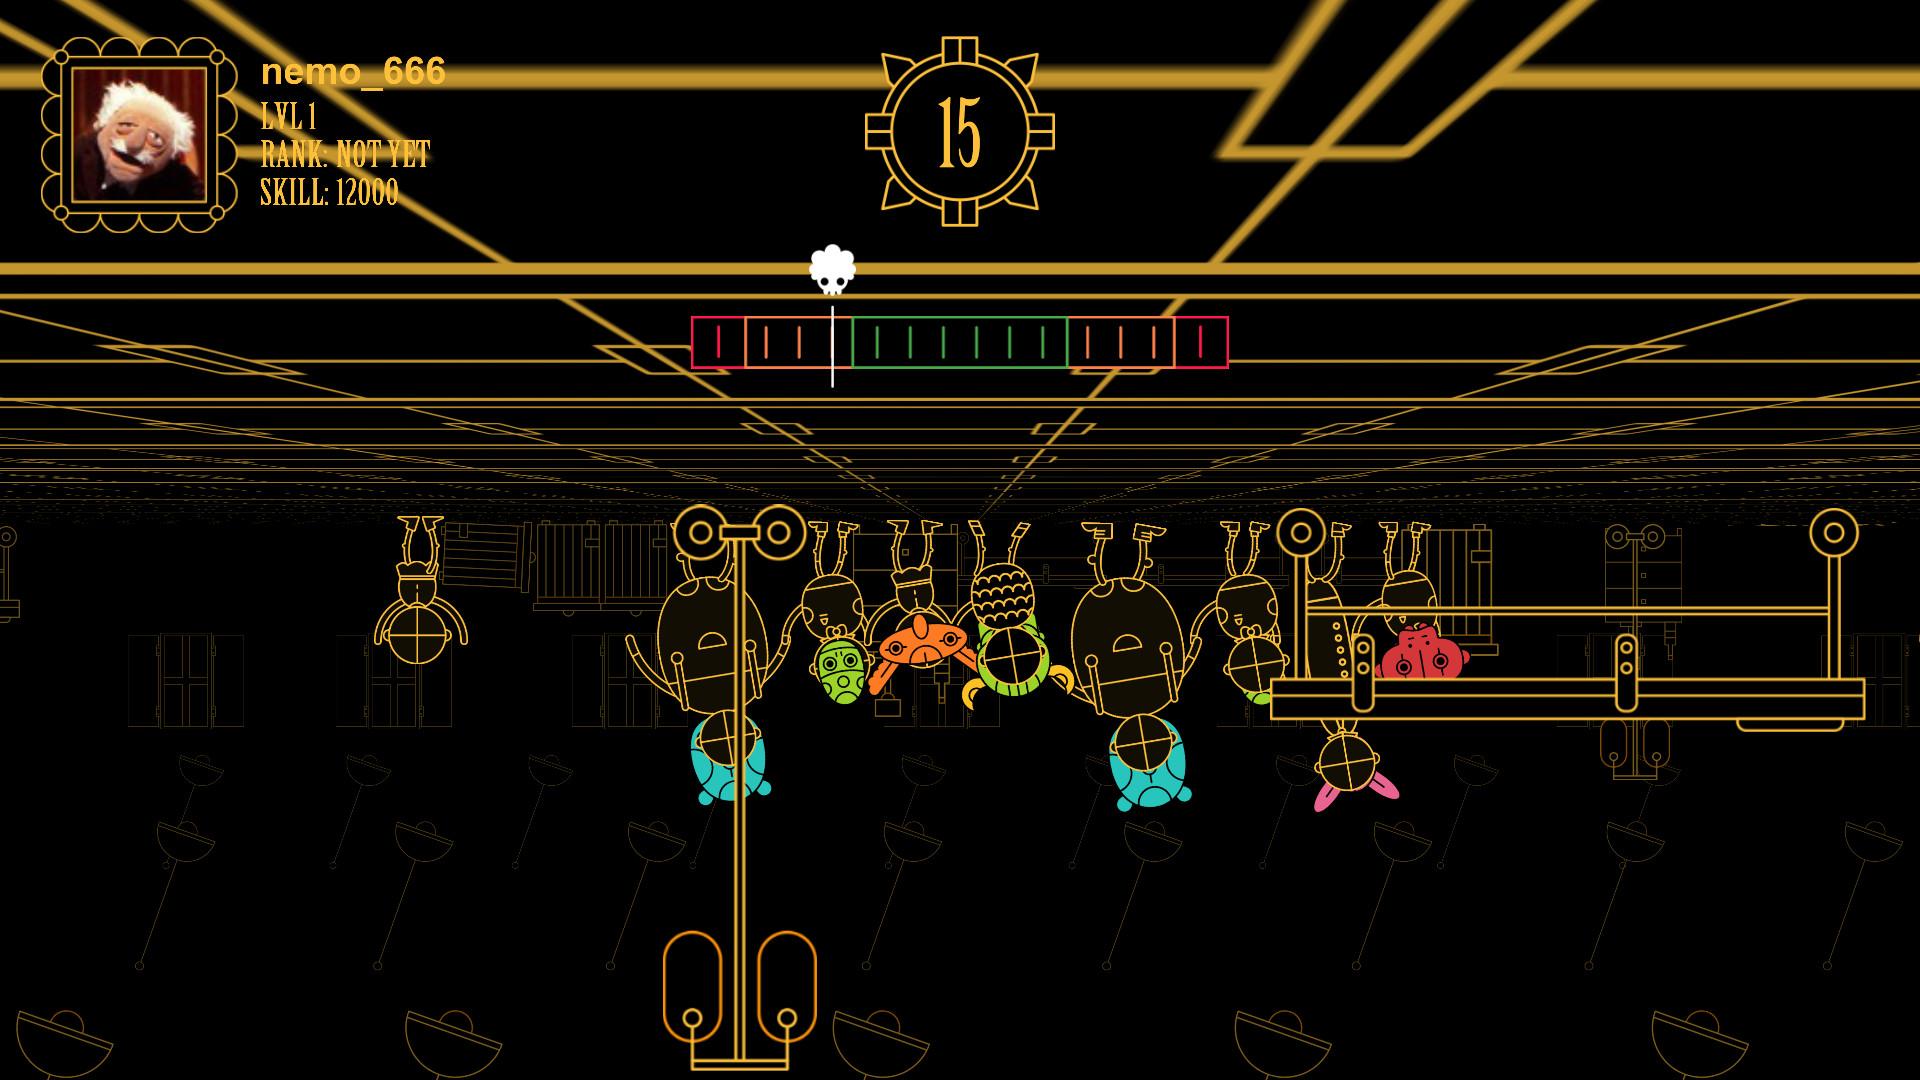 Screenshot №2 from game Masky